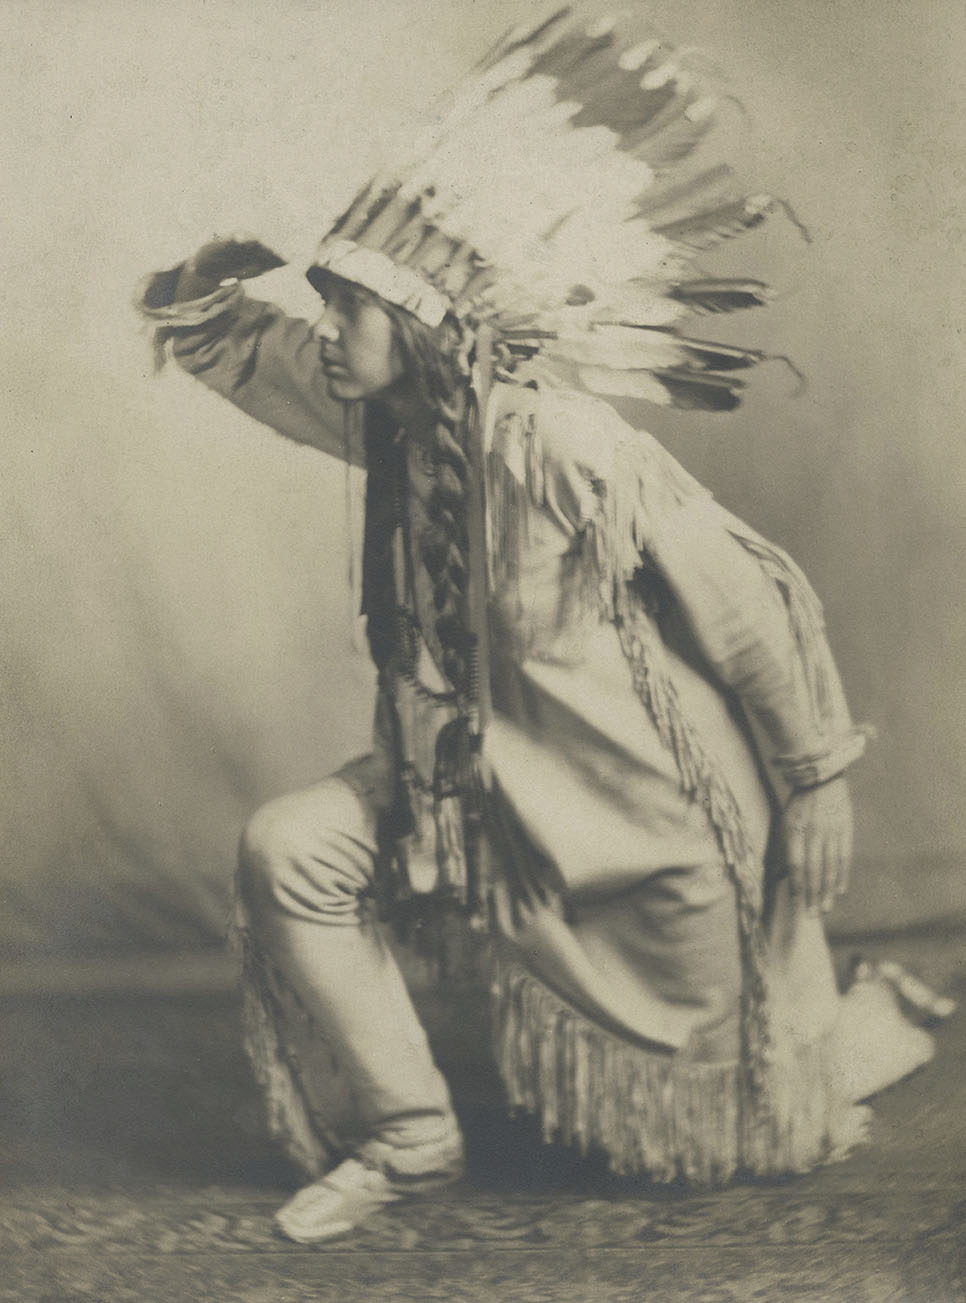 Te Ata posing in a Native American headdress.